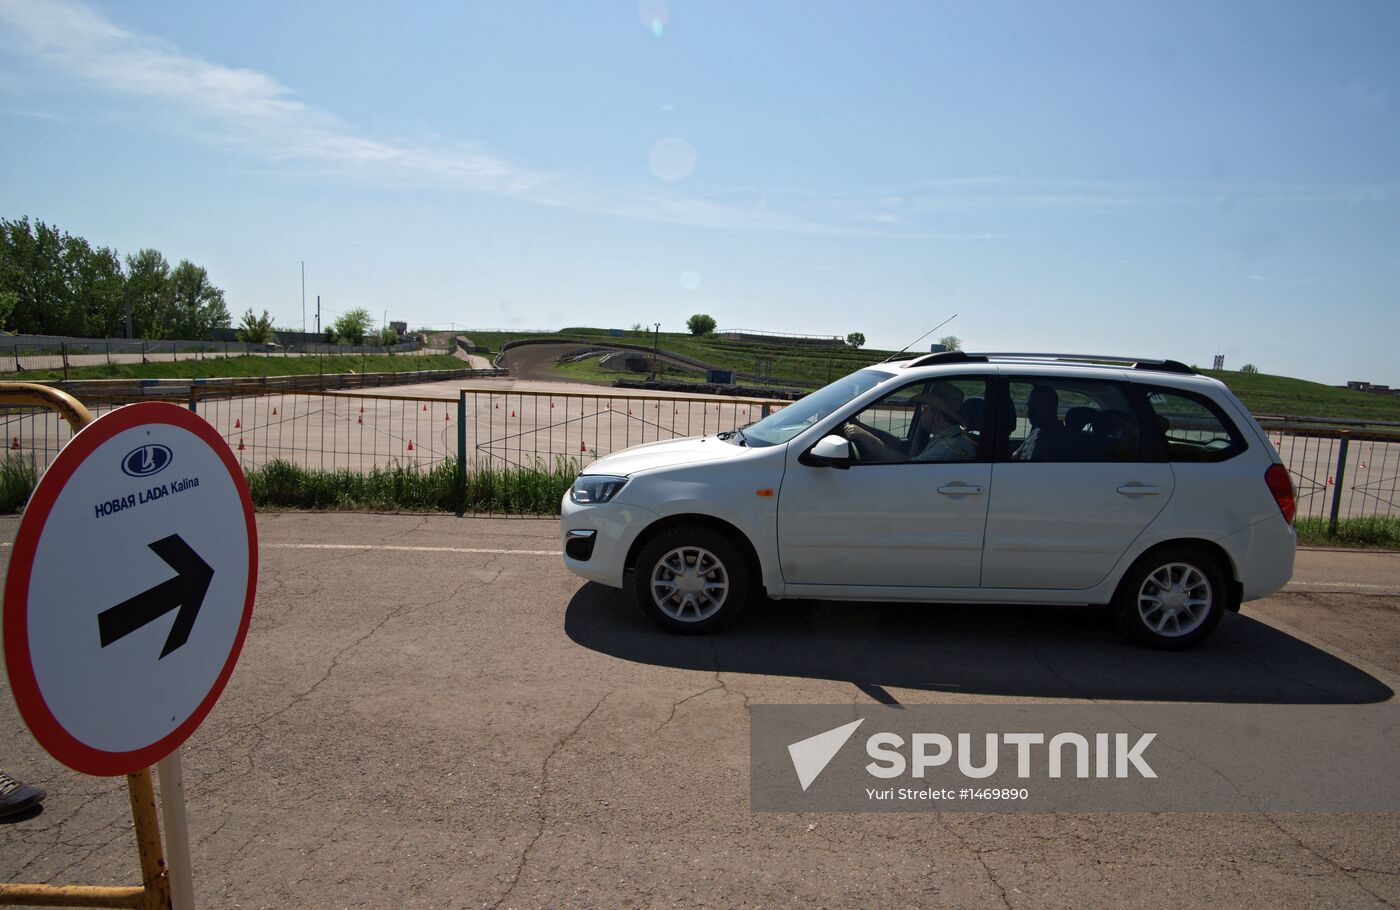 New Lada Kalina model launched at AvtoVAZ